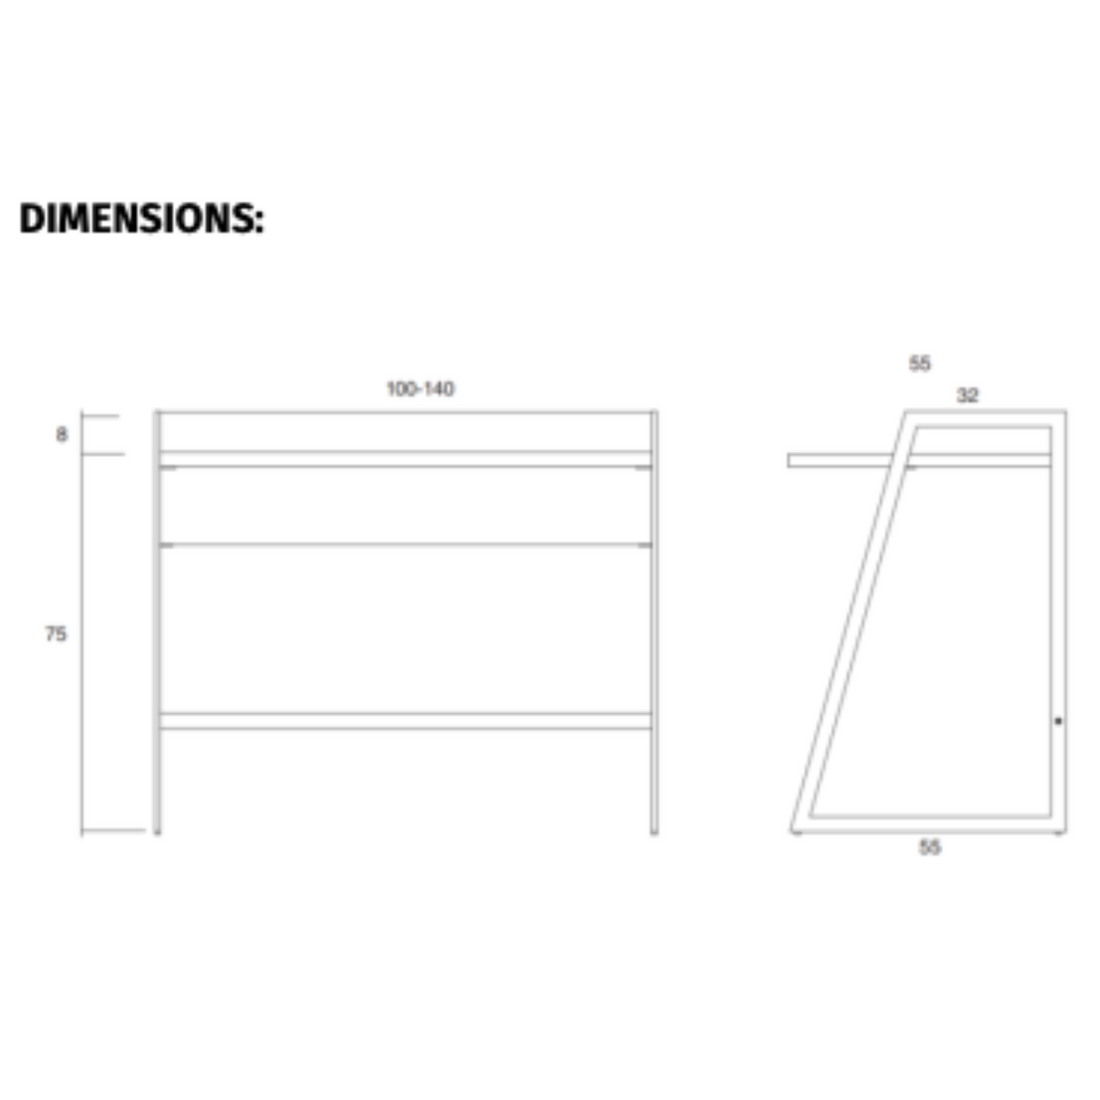 MOBENIA Nerd Desk Dimensions